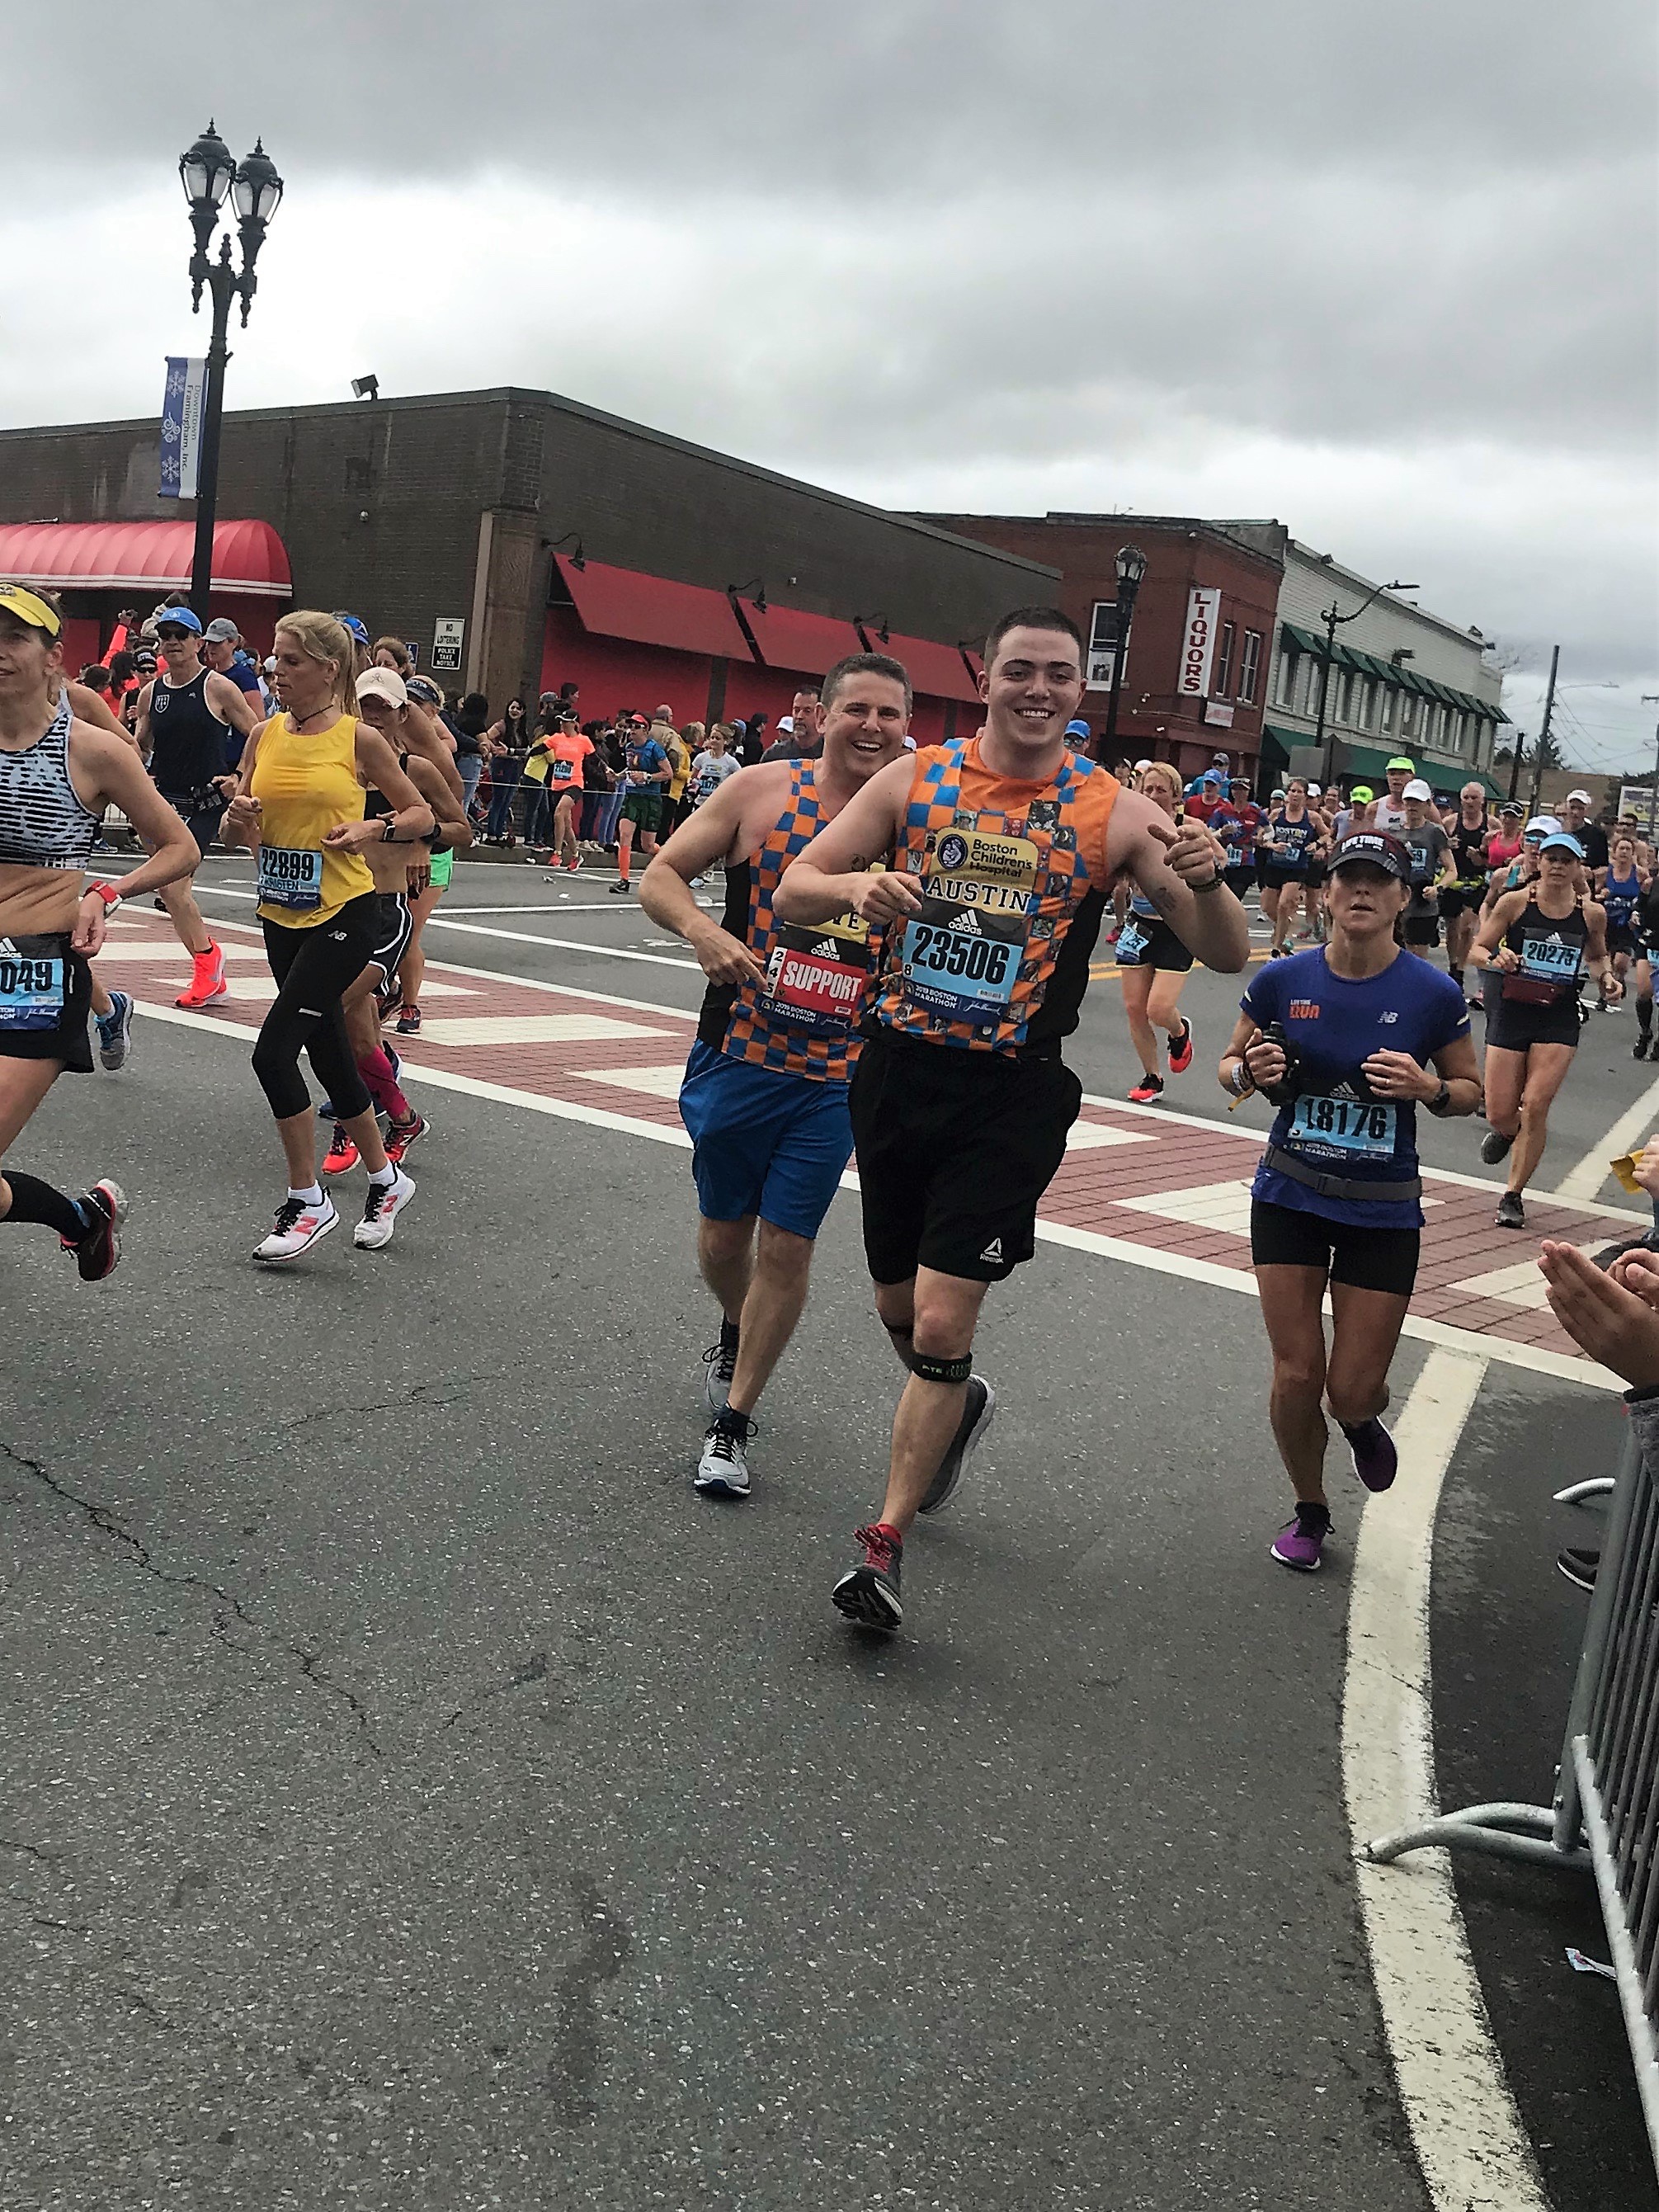 Rhode Island runner overcomes heart challenges to finish second Boston Marathon